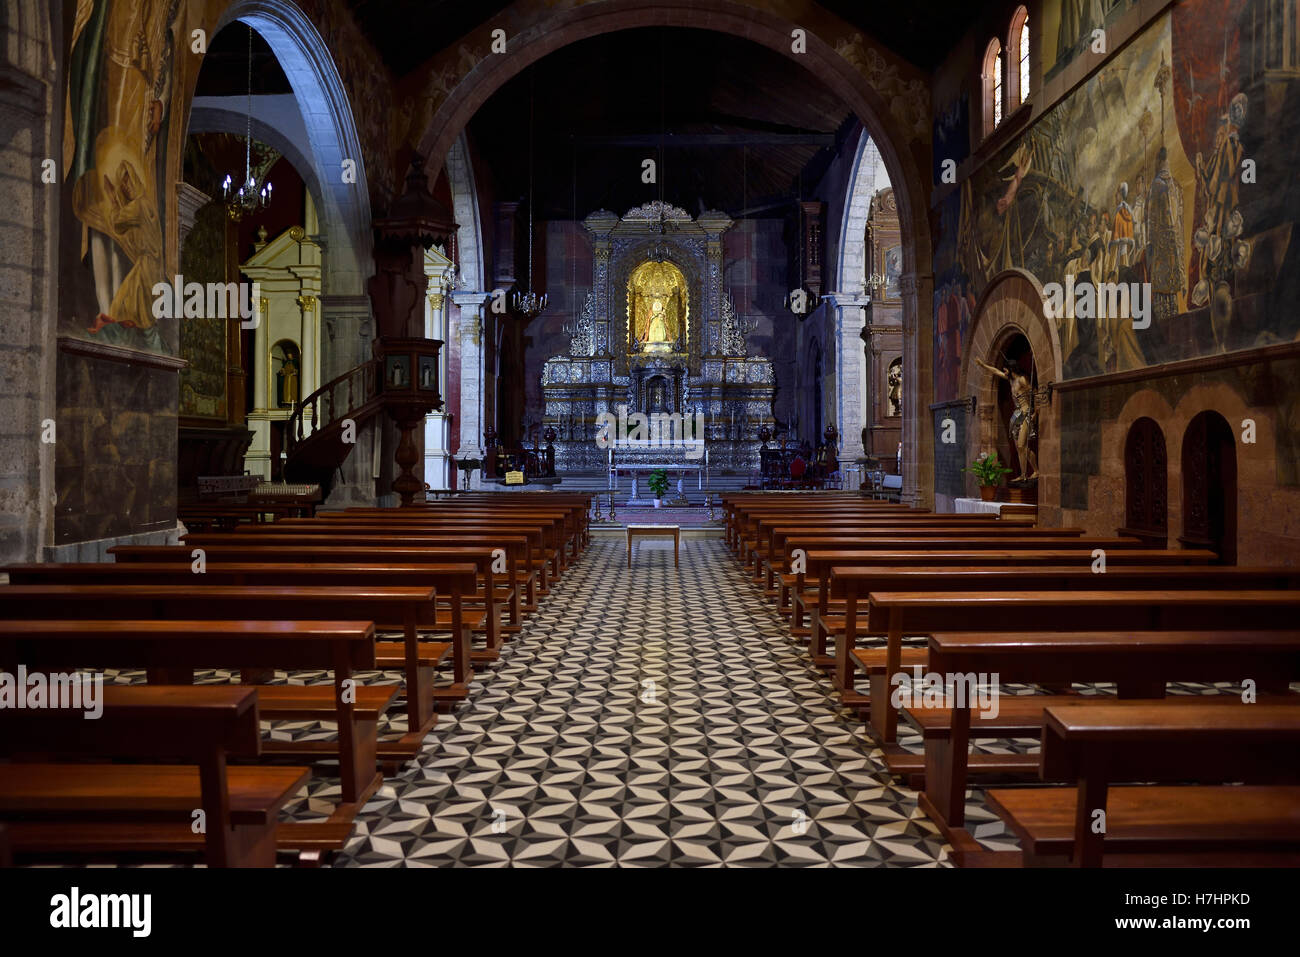 Iglesia de santo domingo de guzman hi-res stock photography and images -  Alamy